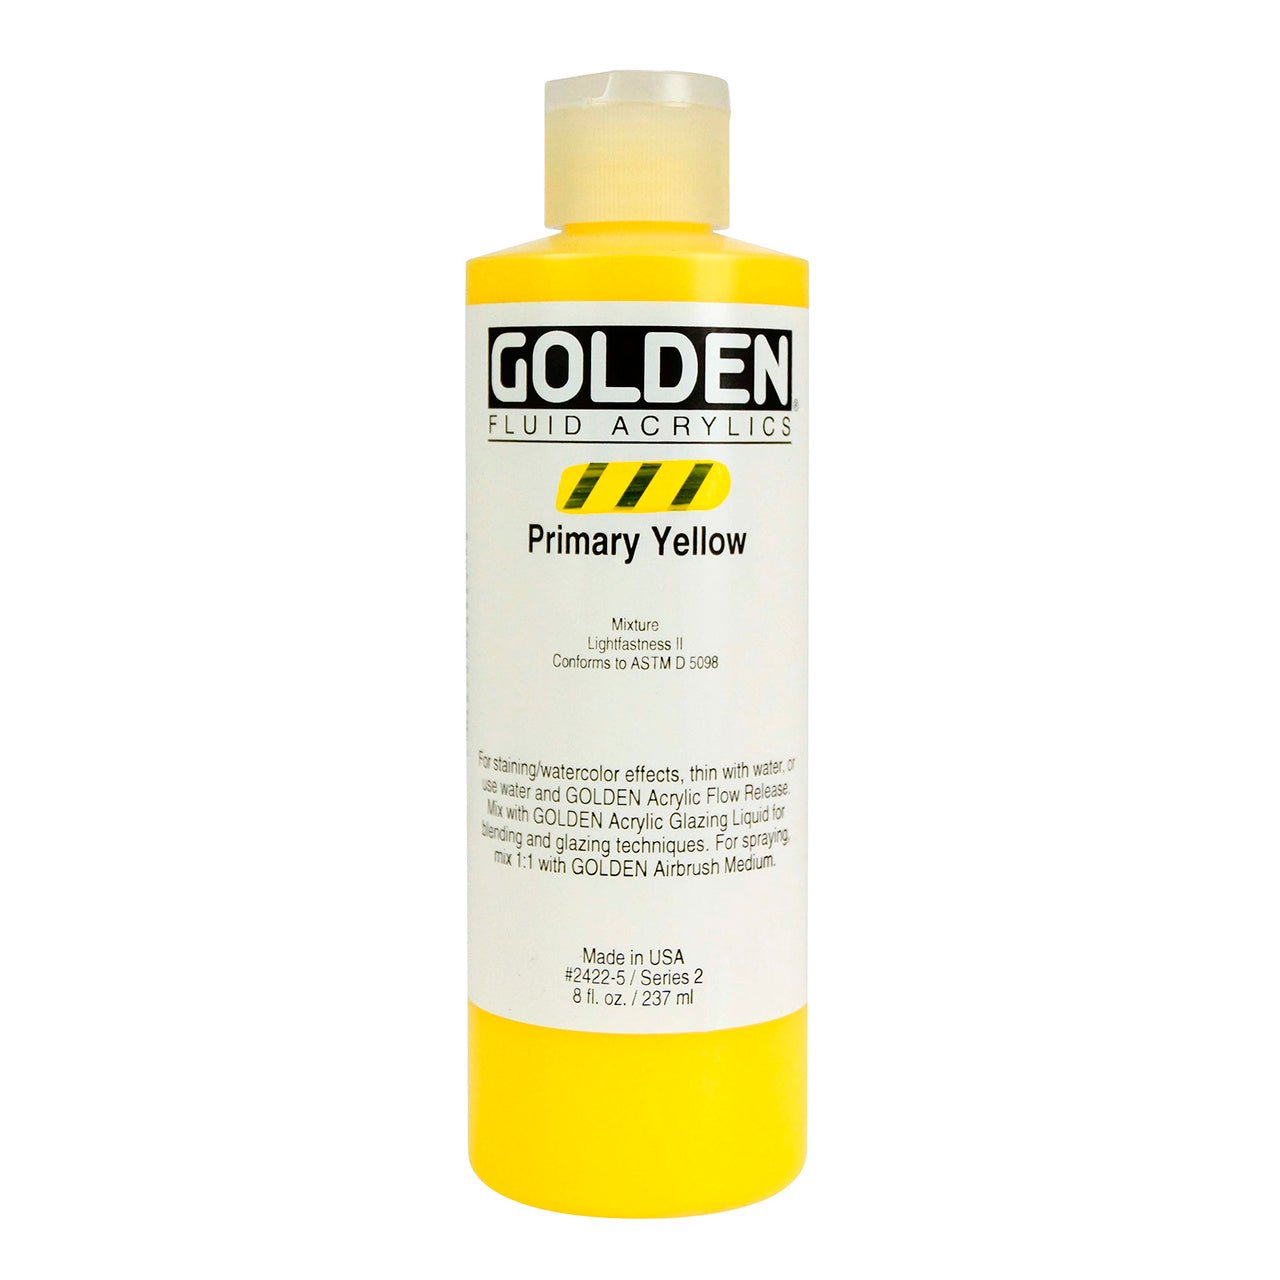 Golden Fluid Acrylic Primary Yellow 8 oz - merriartist.com